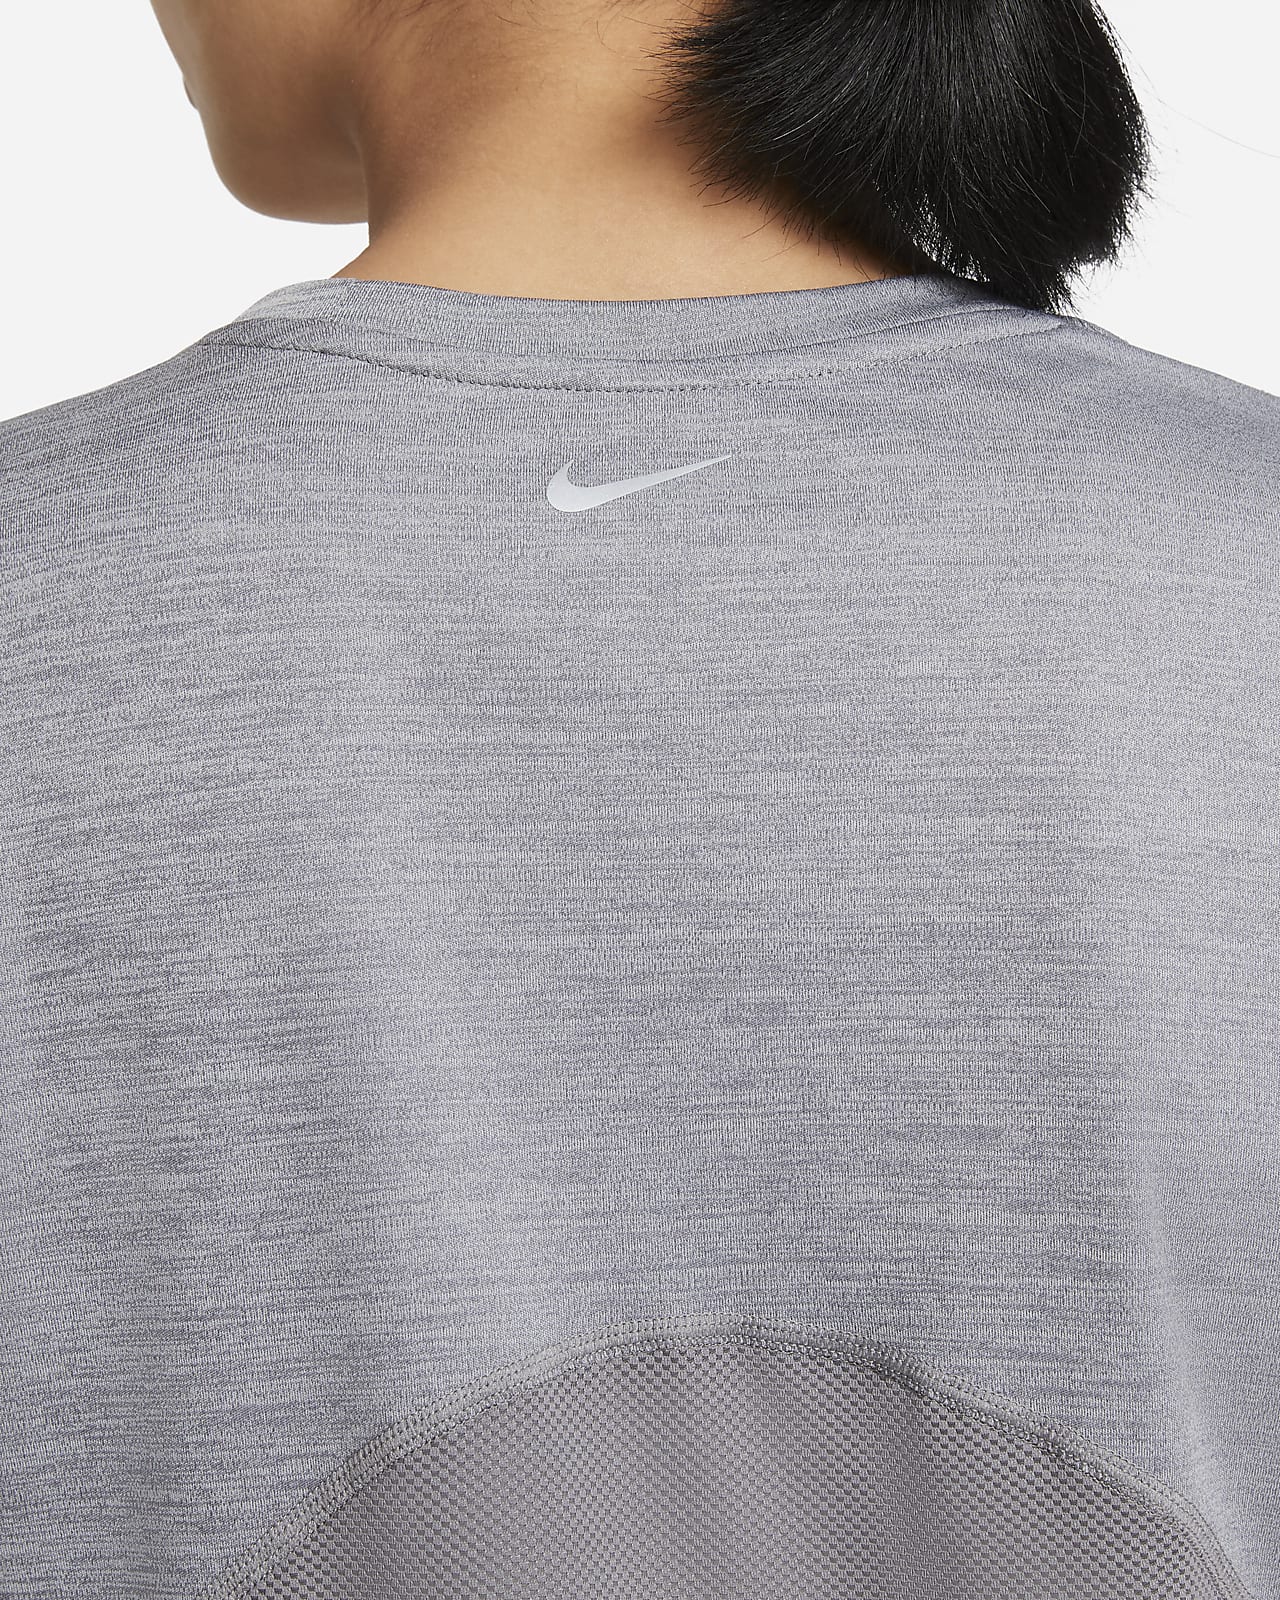 Nike Running Women\'s Short-Sleeve Miler Top.